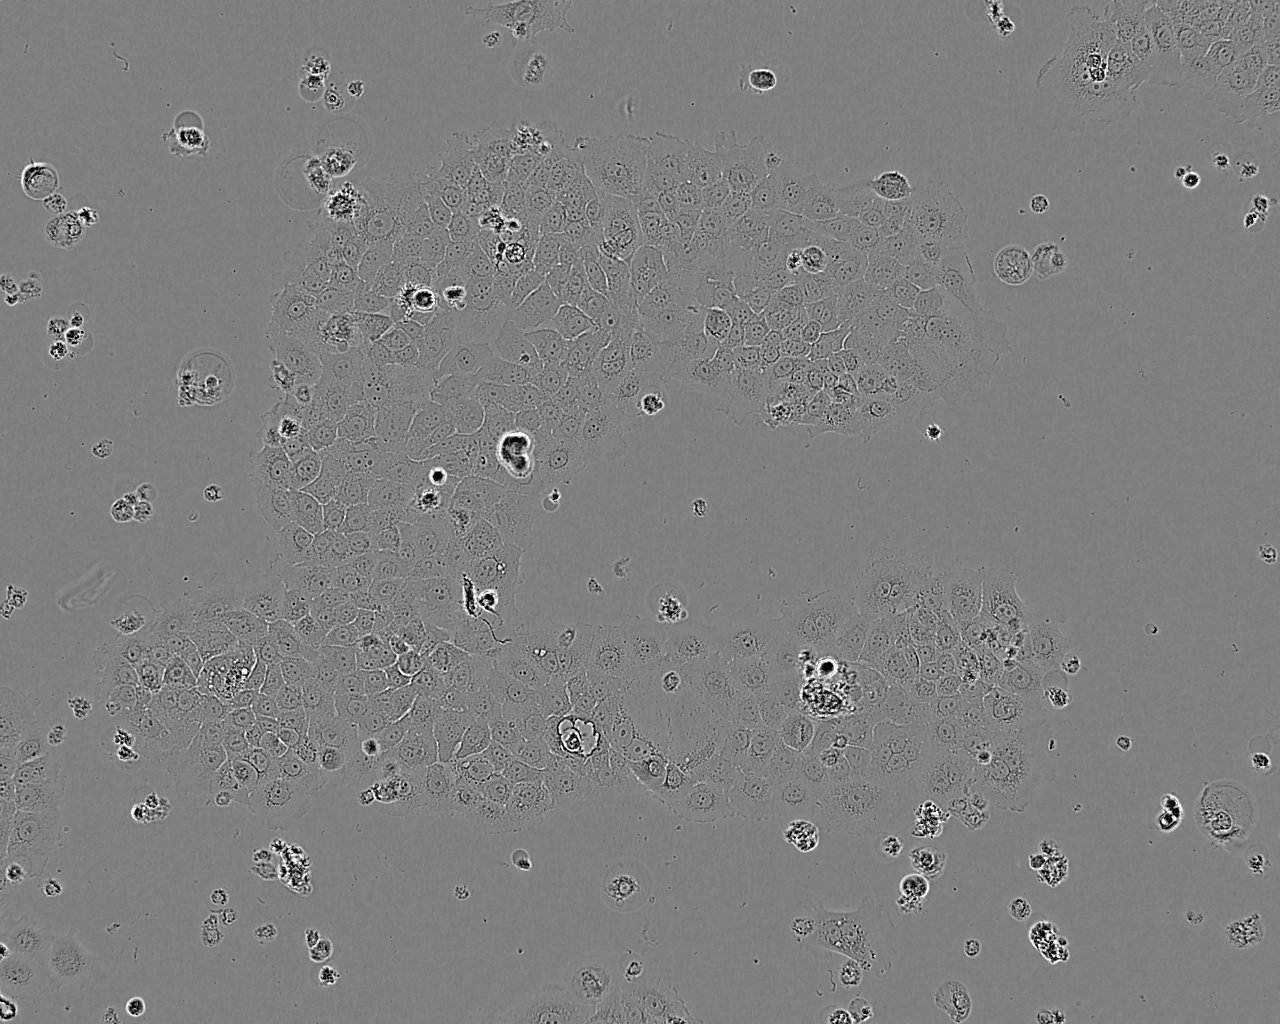 CTX TNA2 epithelioid cells大鼠星形胶质细胞系